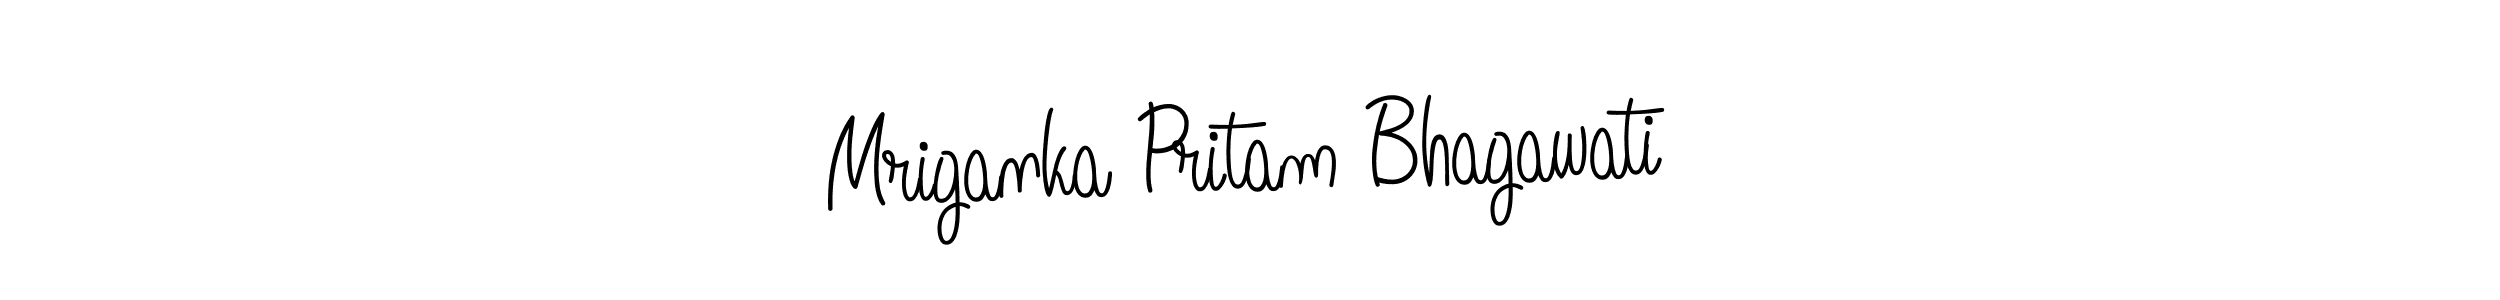 Best and Professional Signature Style for Mriganka Pritam Bhagawati. Angelique-Rose-font-FFP Best Signature Style Collection. Mriganka Pritam Bhagawati signature style 5 images and pictures png